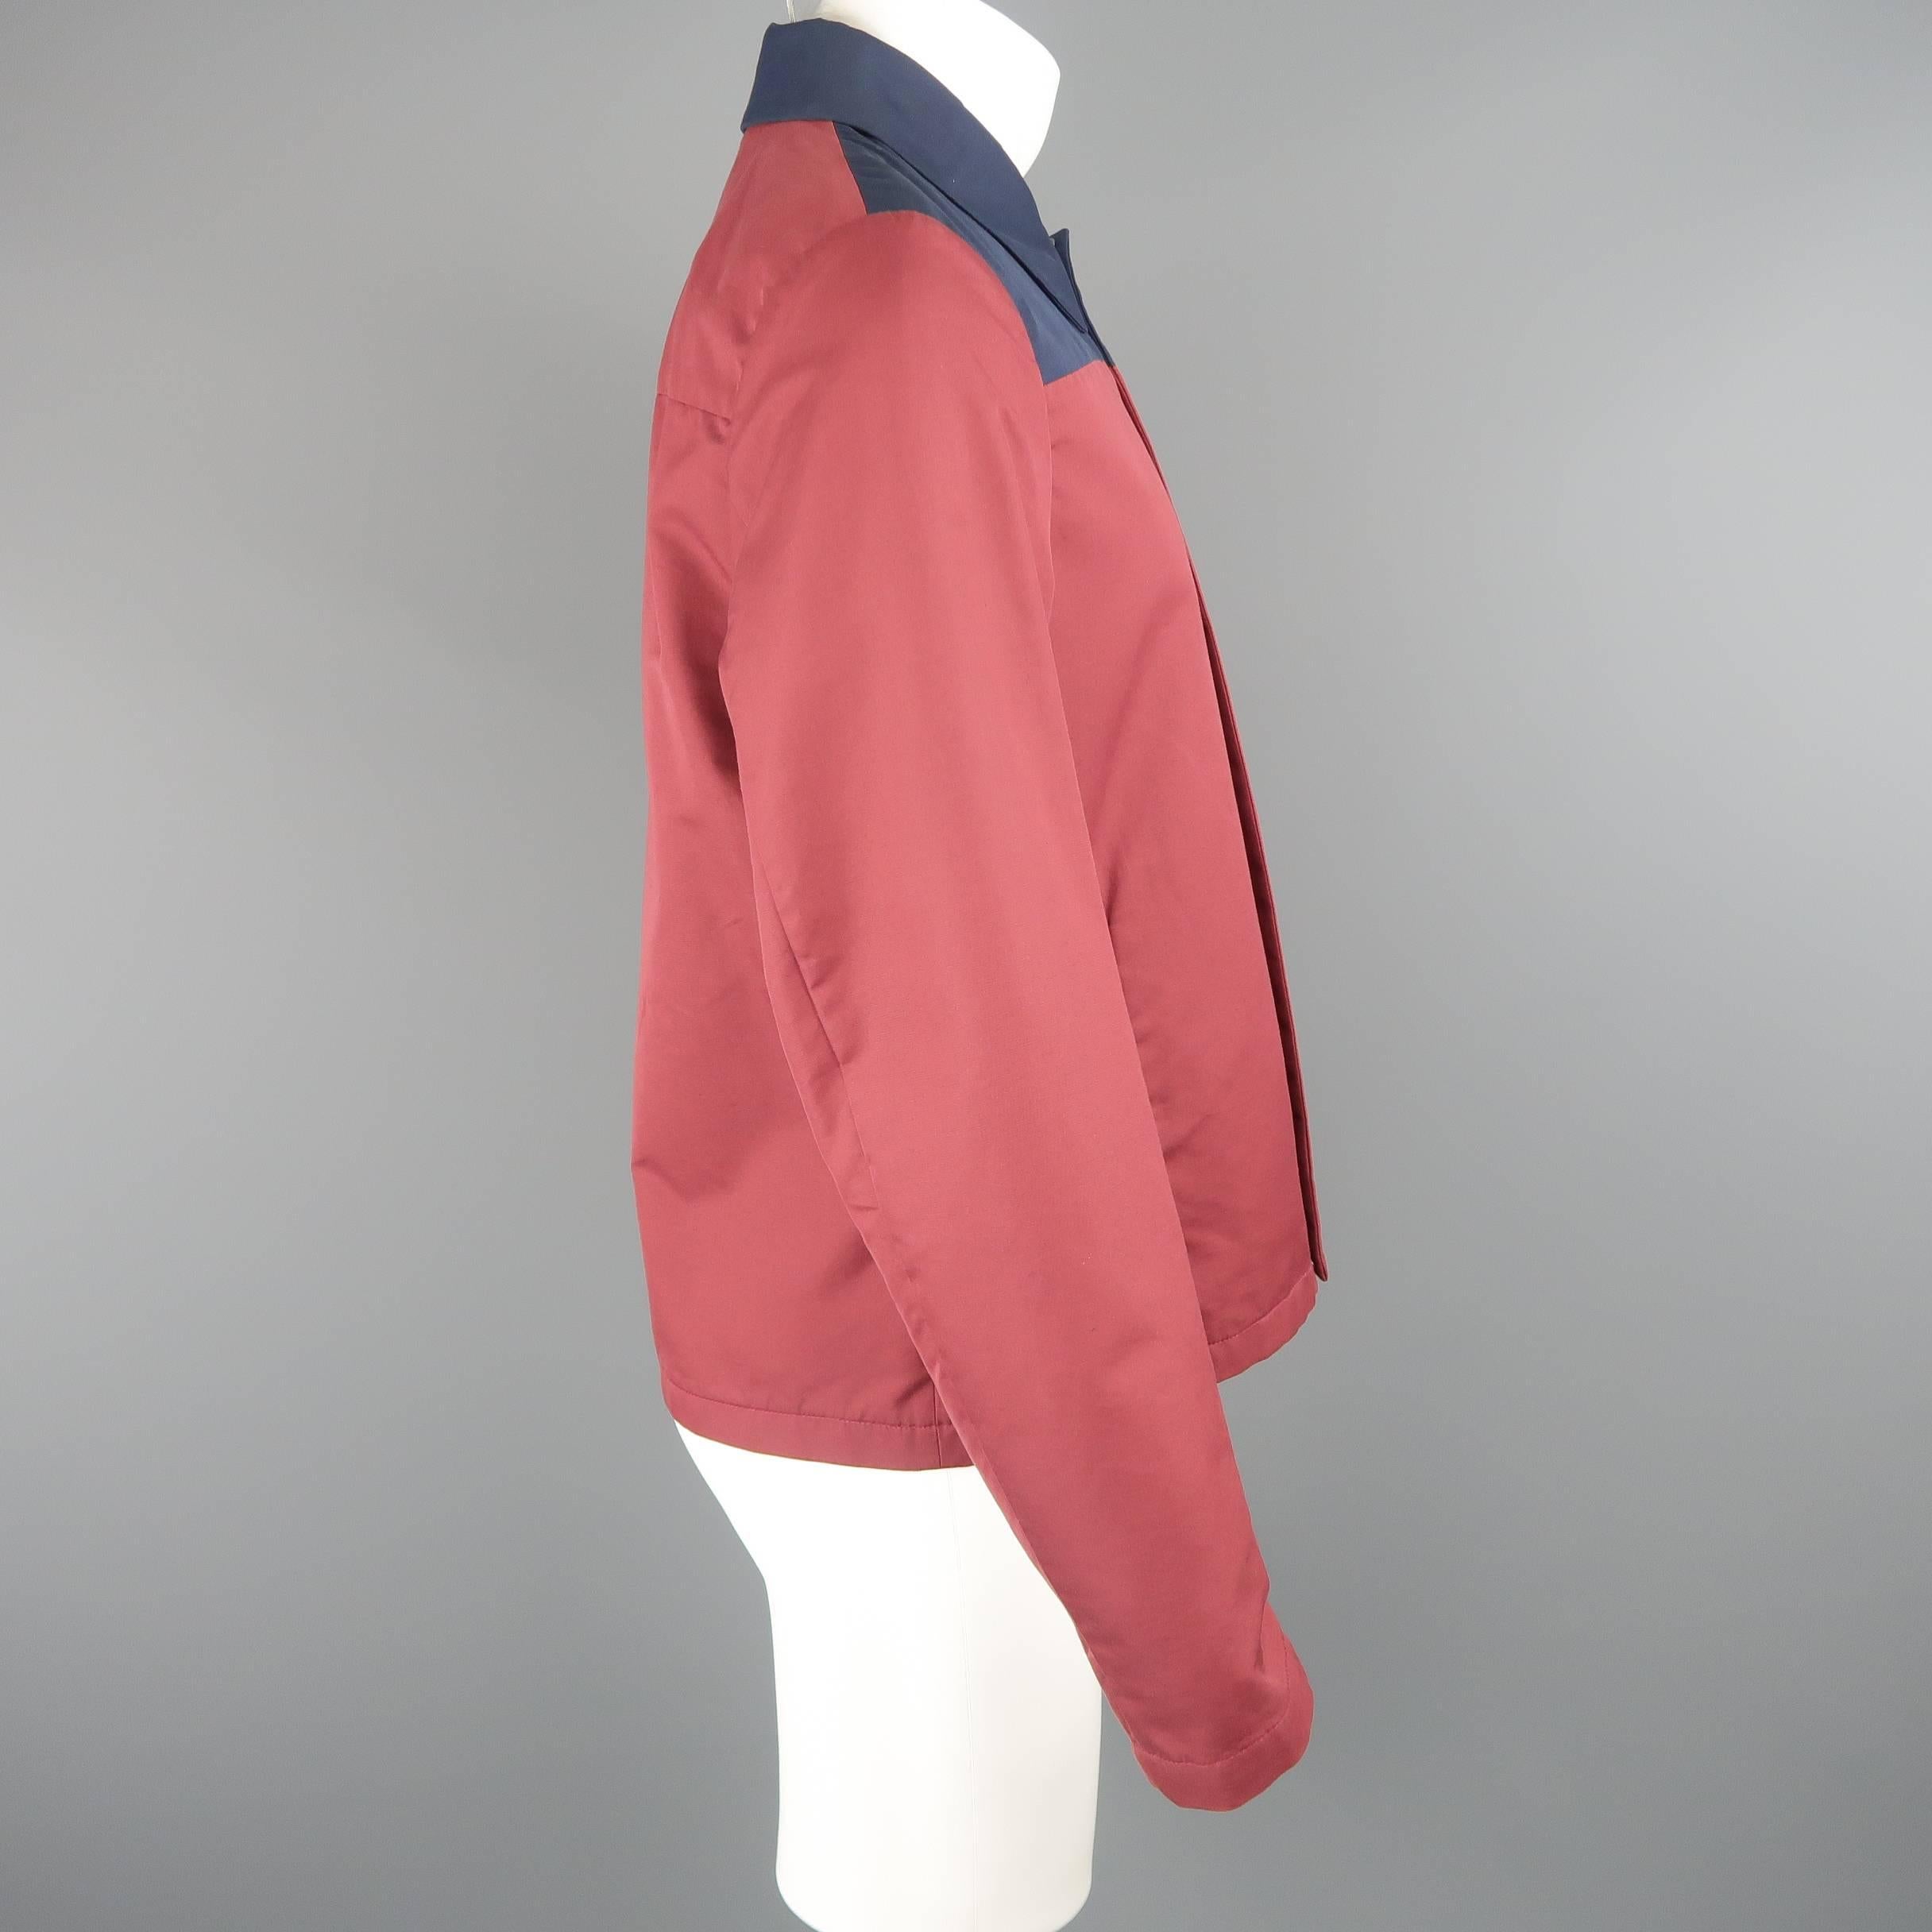 Pink Men's PRADA 38 Burgundy & Navy Two Toned Cotton Blend Blouson Jacket